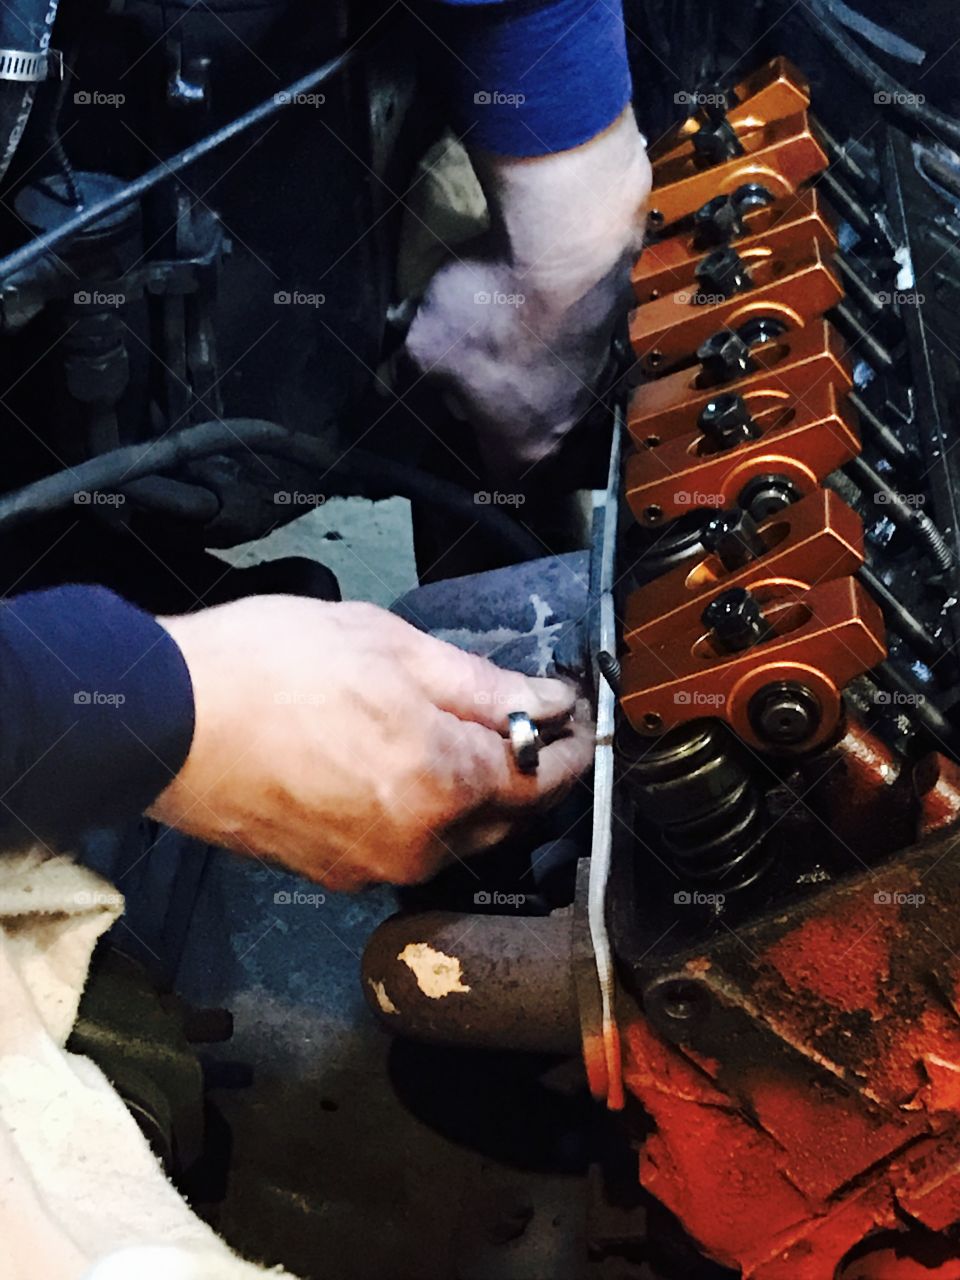 Hands working on engine